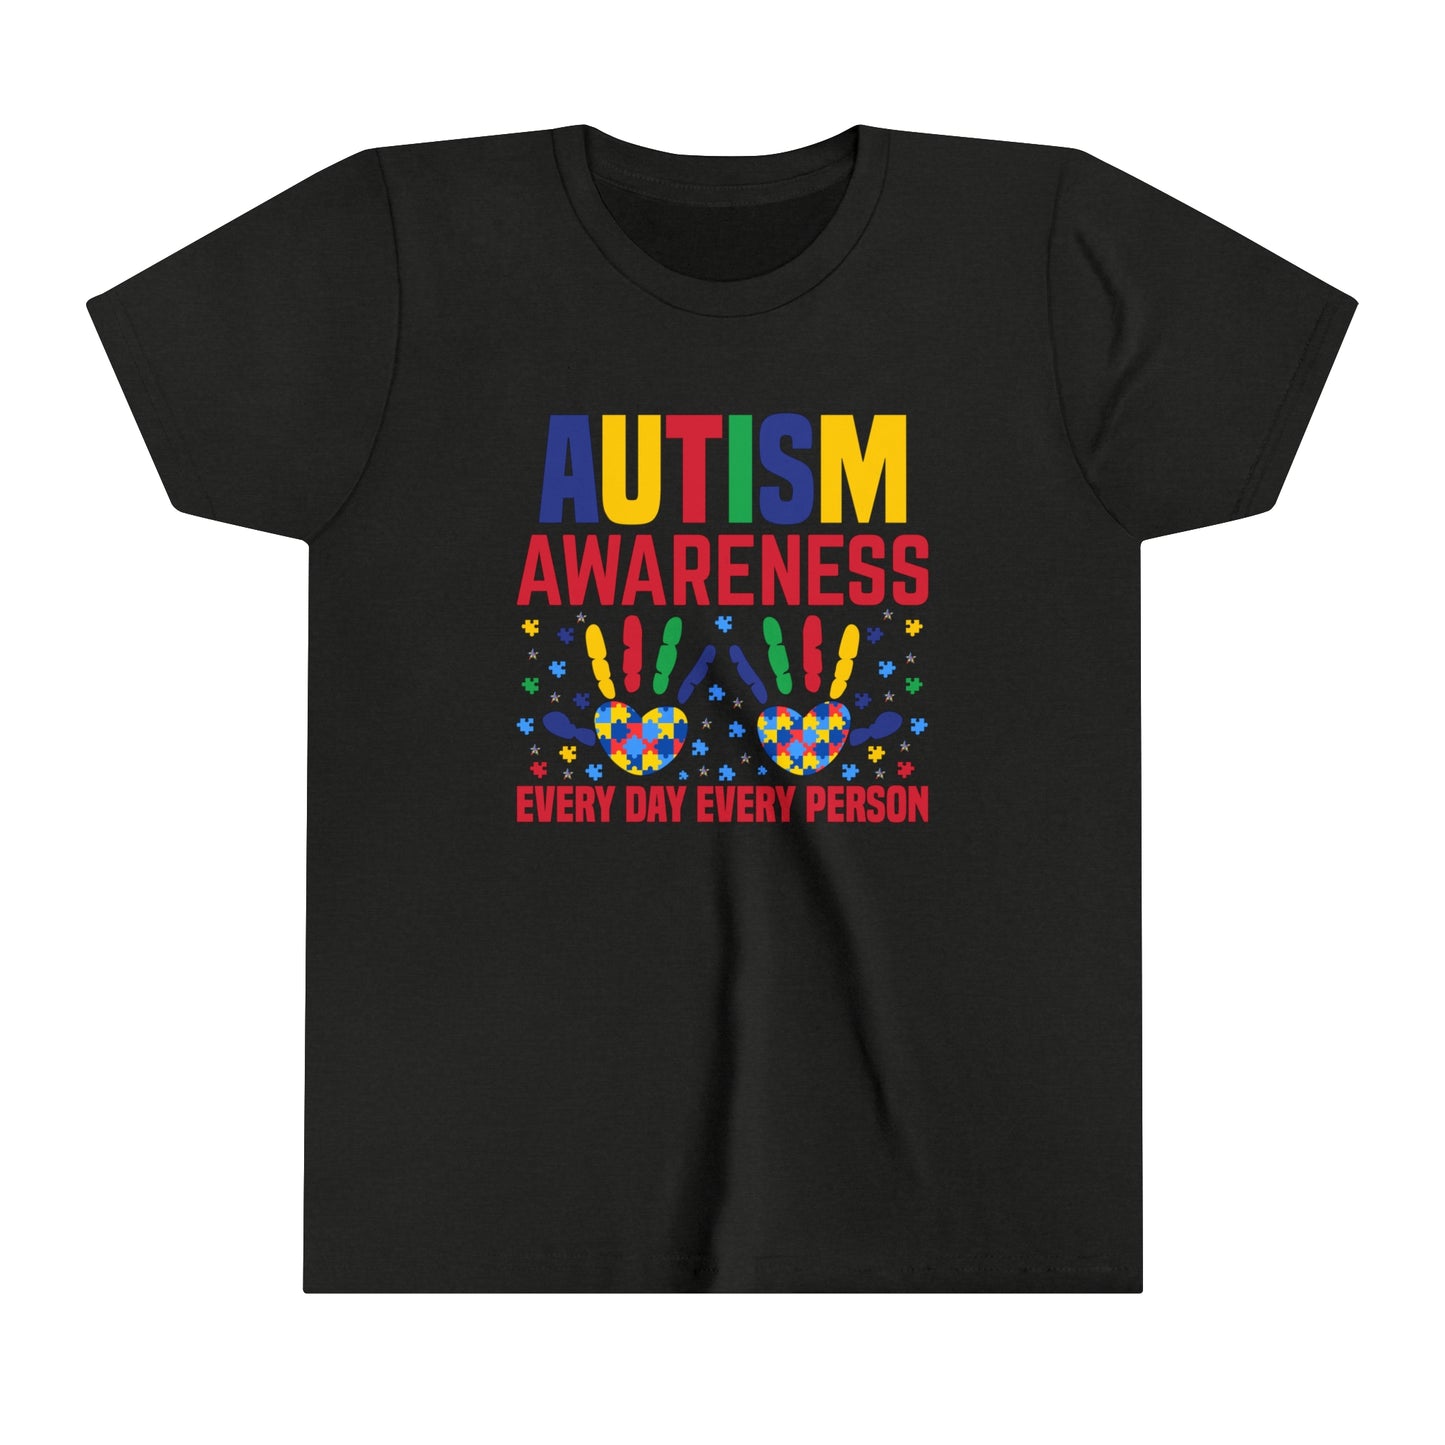 Autism Awareness Advocate Youth Shirt